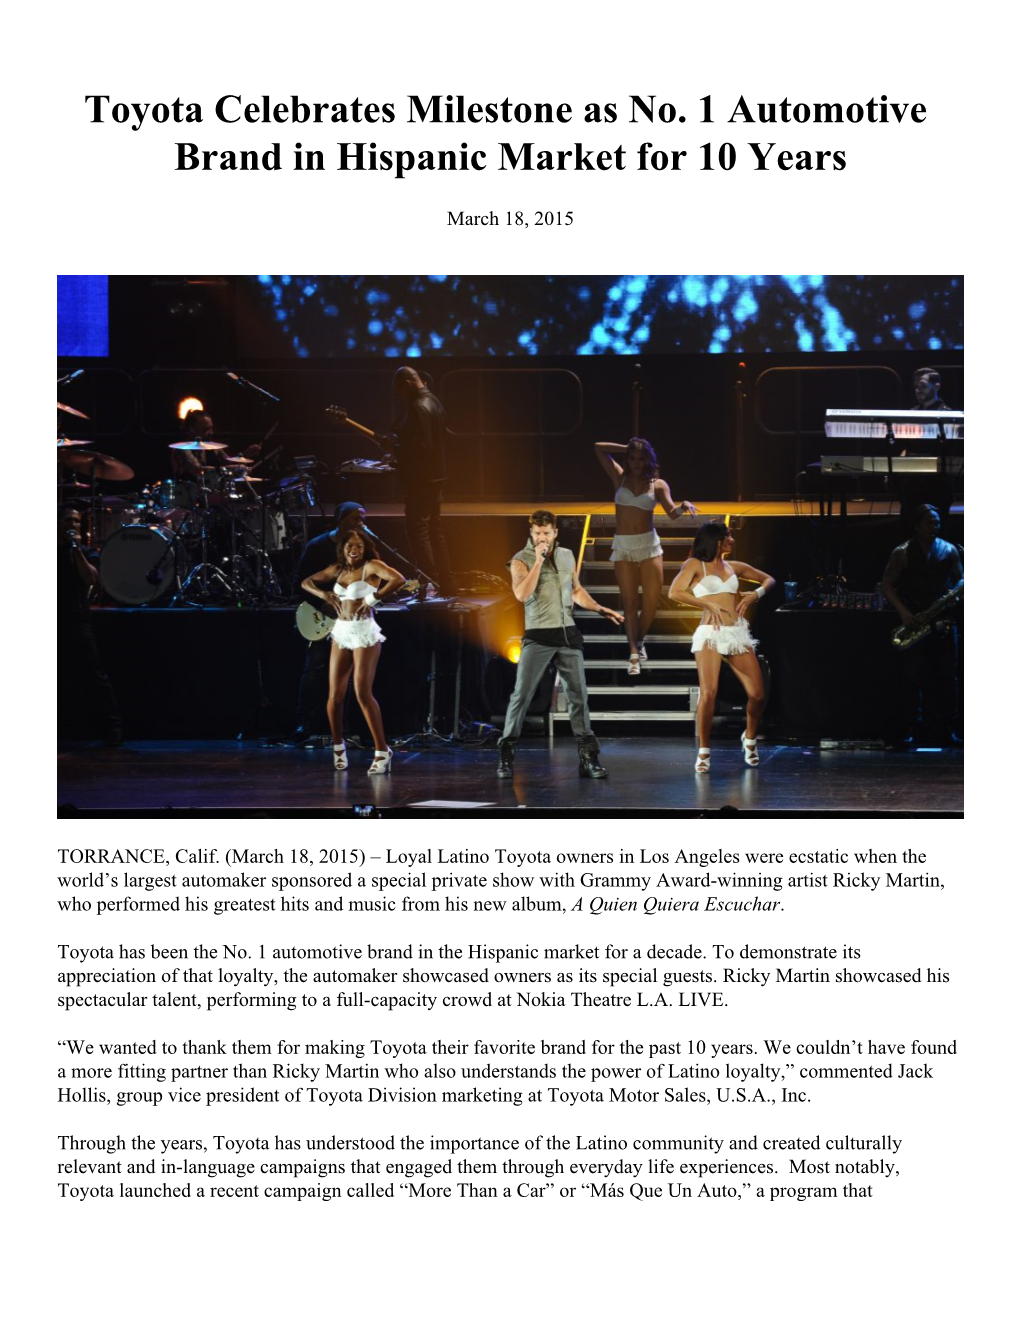 Toyota Celebrates Milestone As No. 1 Automotive Brand in Hispanic Market for 10 Years